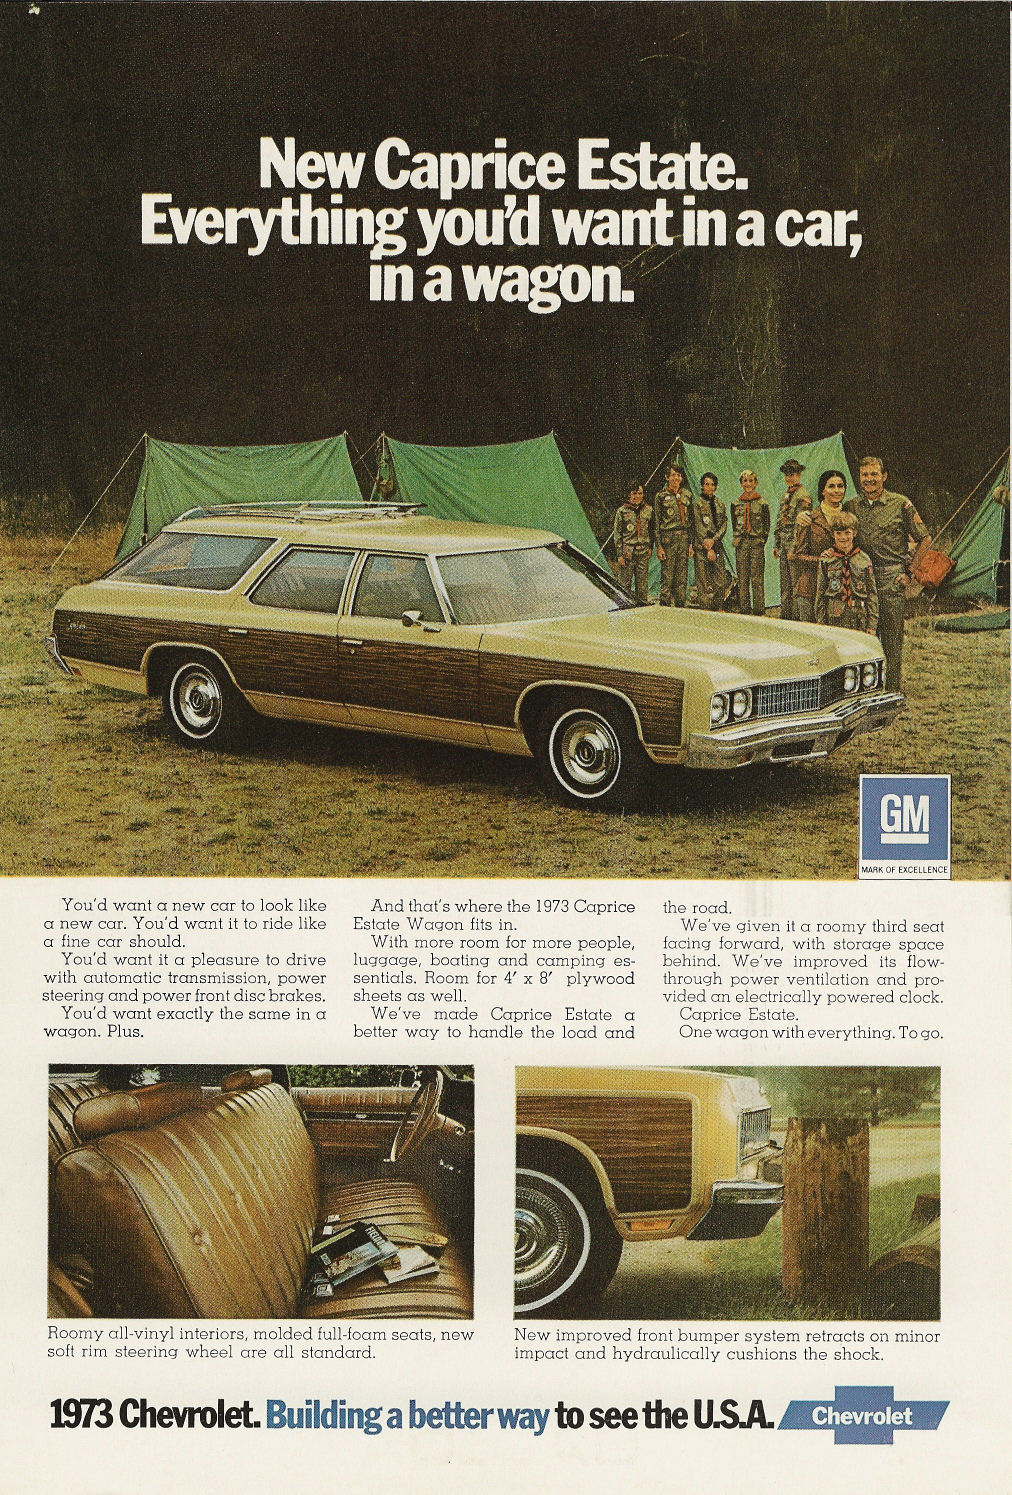 1973 Chevrolet Ad-05